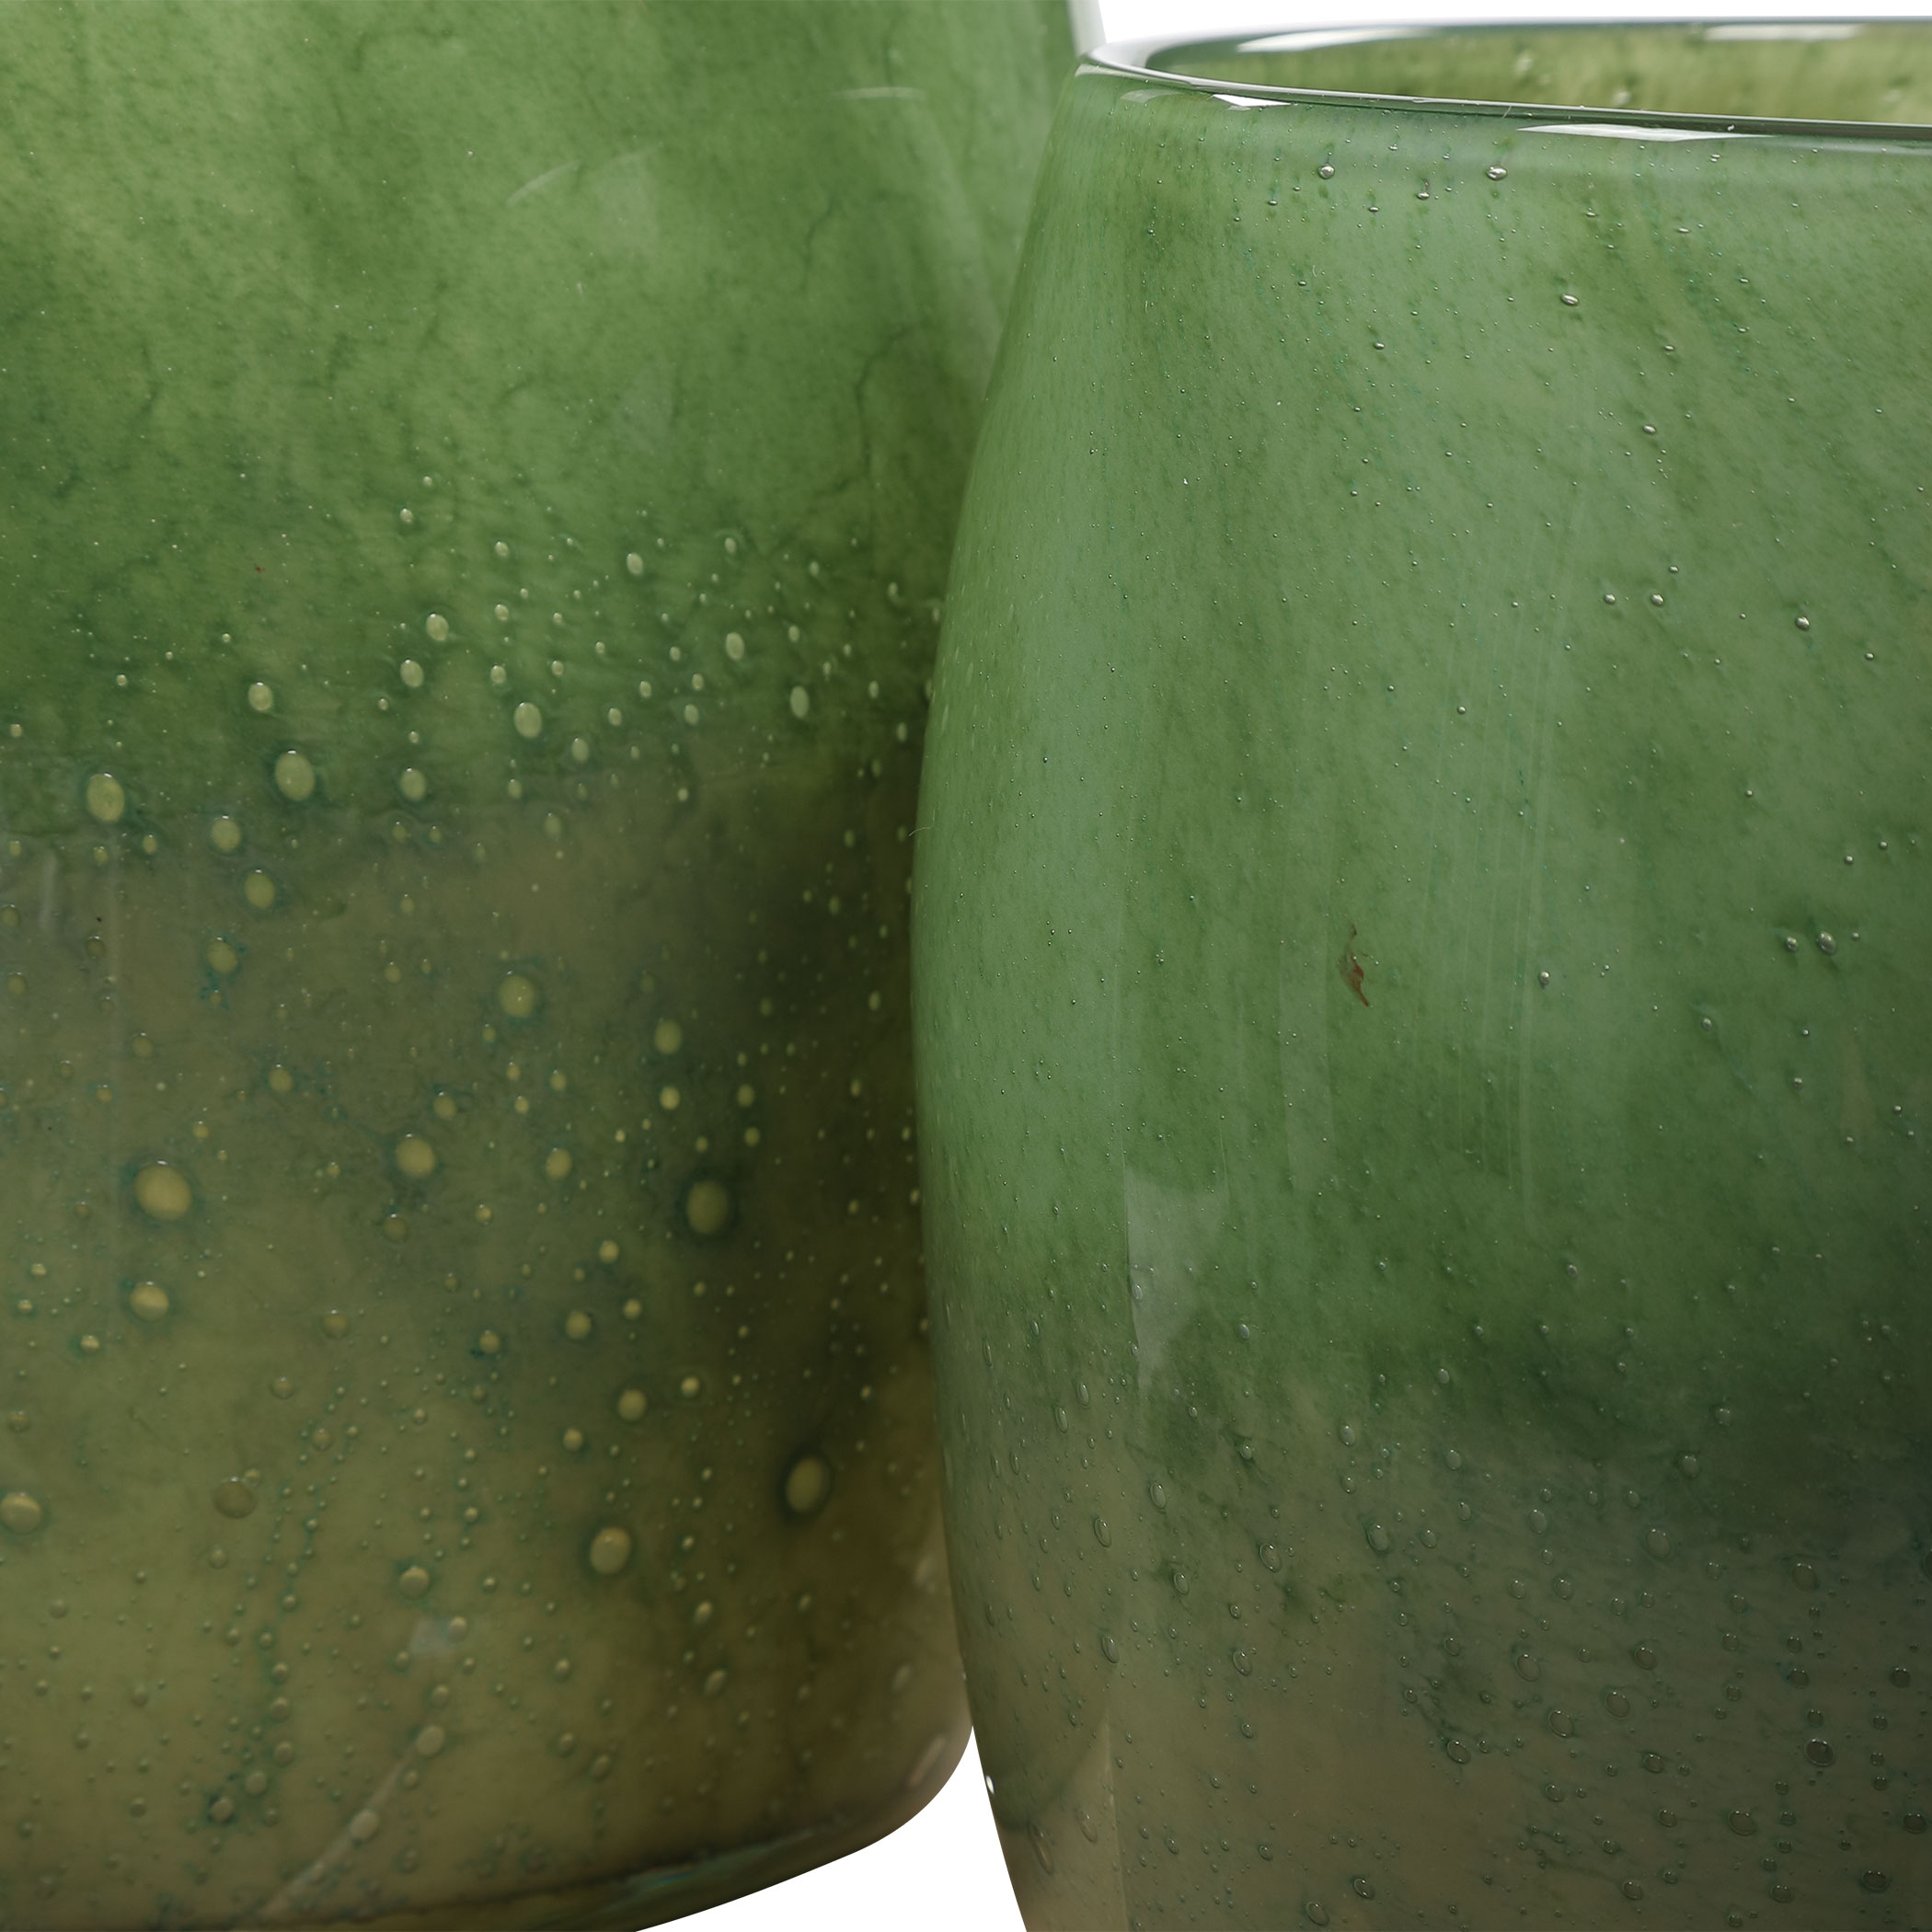 Matcha Green Glass Vases, S/2 - Image 1